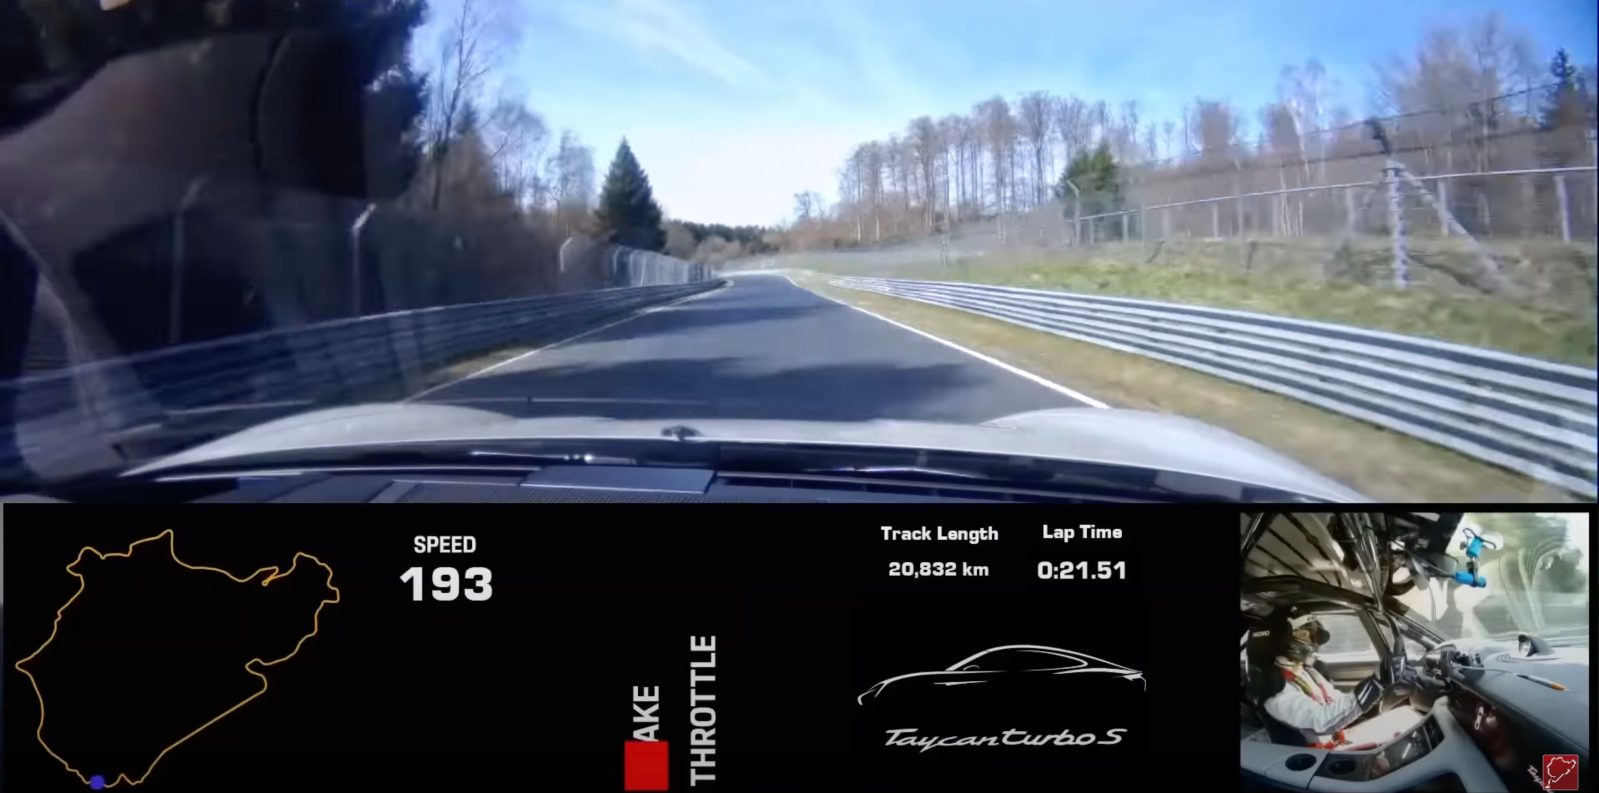 Porsche Taycan Nurburing record lap